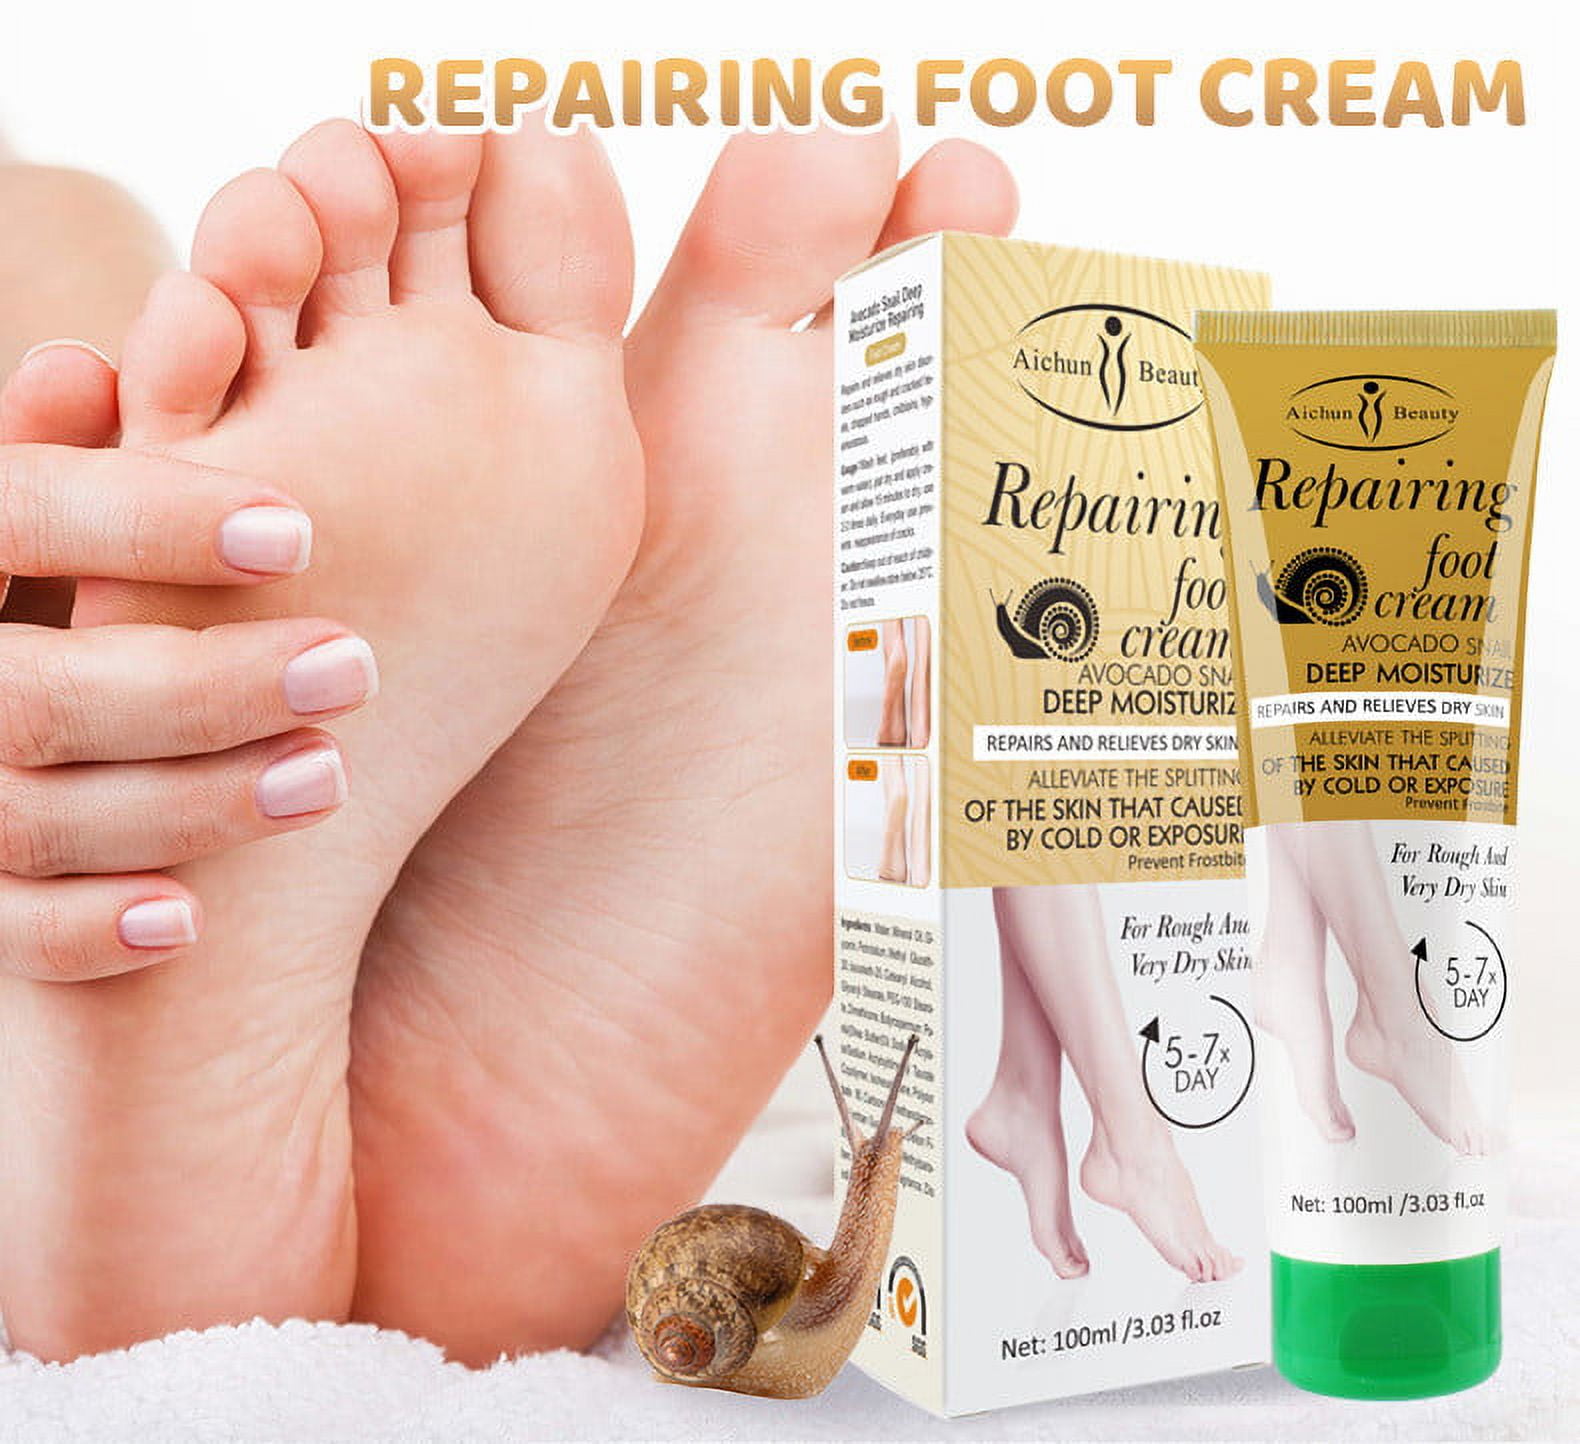 Kokovifyves Foot Finish Repair Cream Athletes Reatment 4Oz Dry Cracked Feet Nighttime intensive Repair Skin Healing Ointment 0c264938 3abb 49be 8310 7eb94f4ca62d.4986fca5da31a5f33f05e756f290cf36